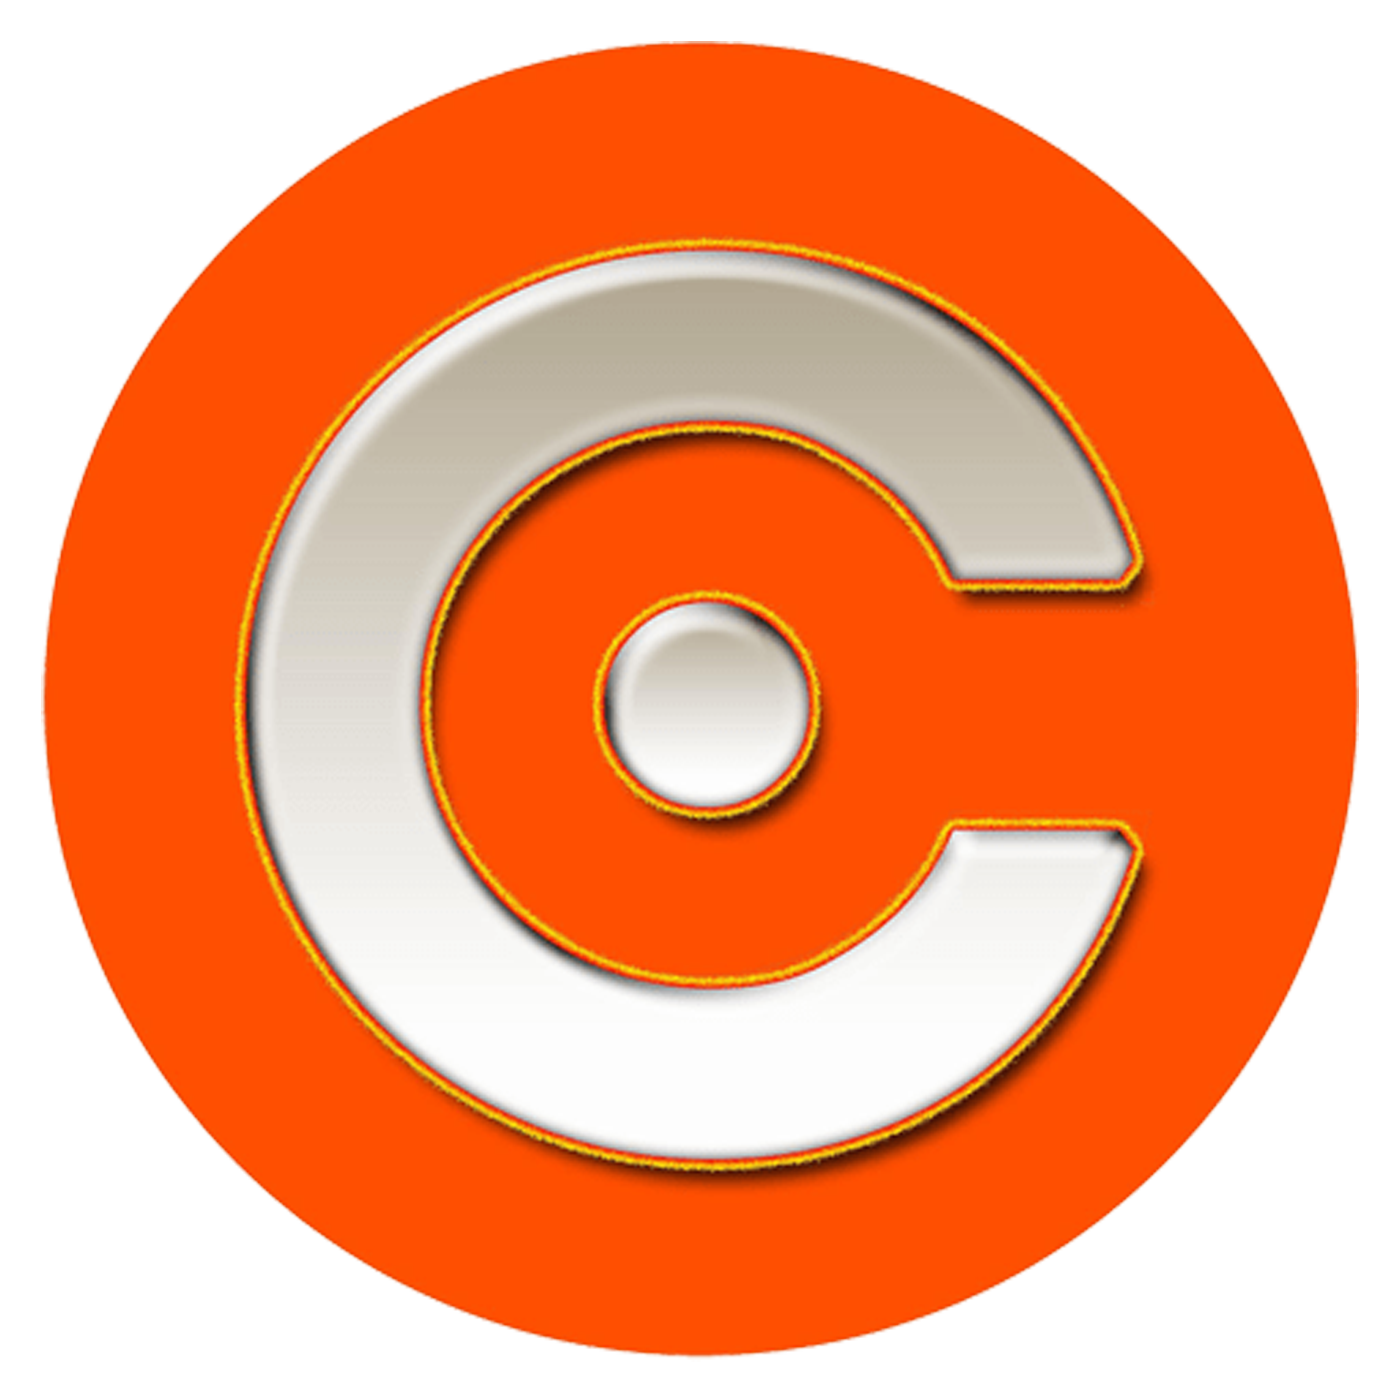 Logo Controradio